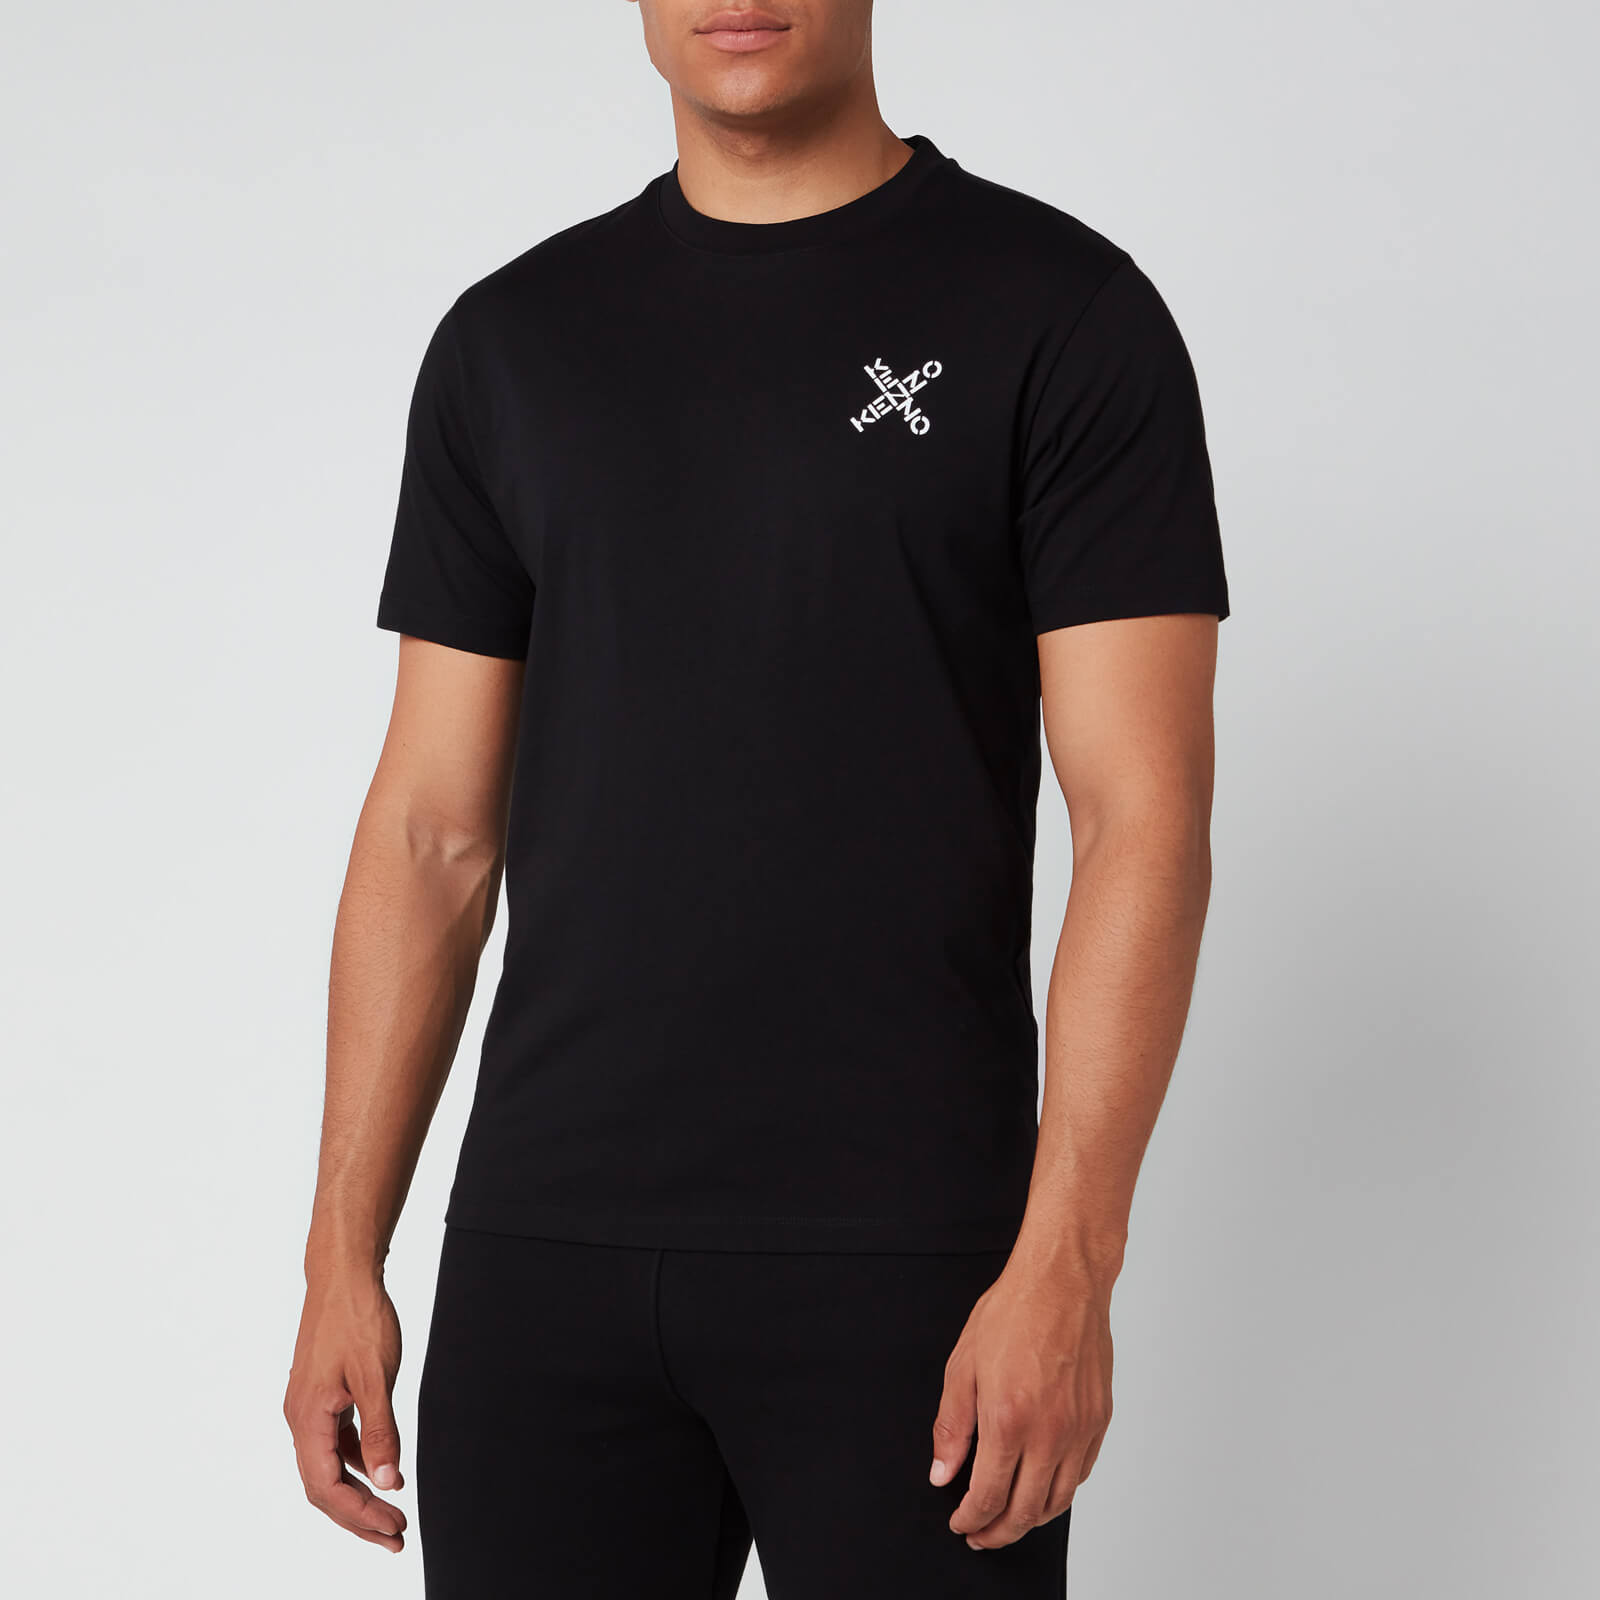 KENZO Men's Sport Classic T-Shirt - Black - S